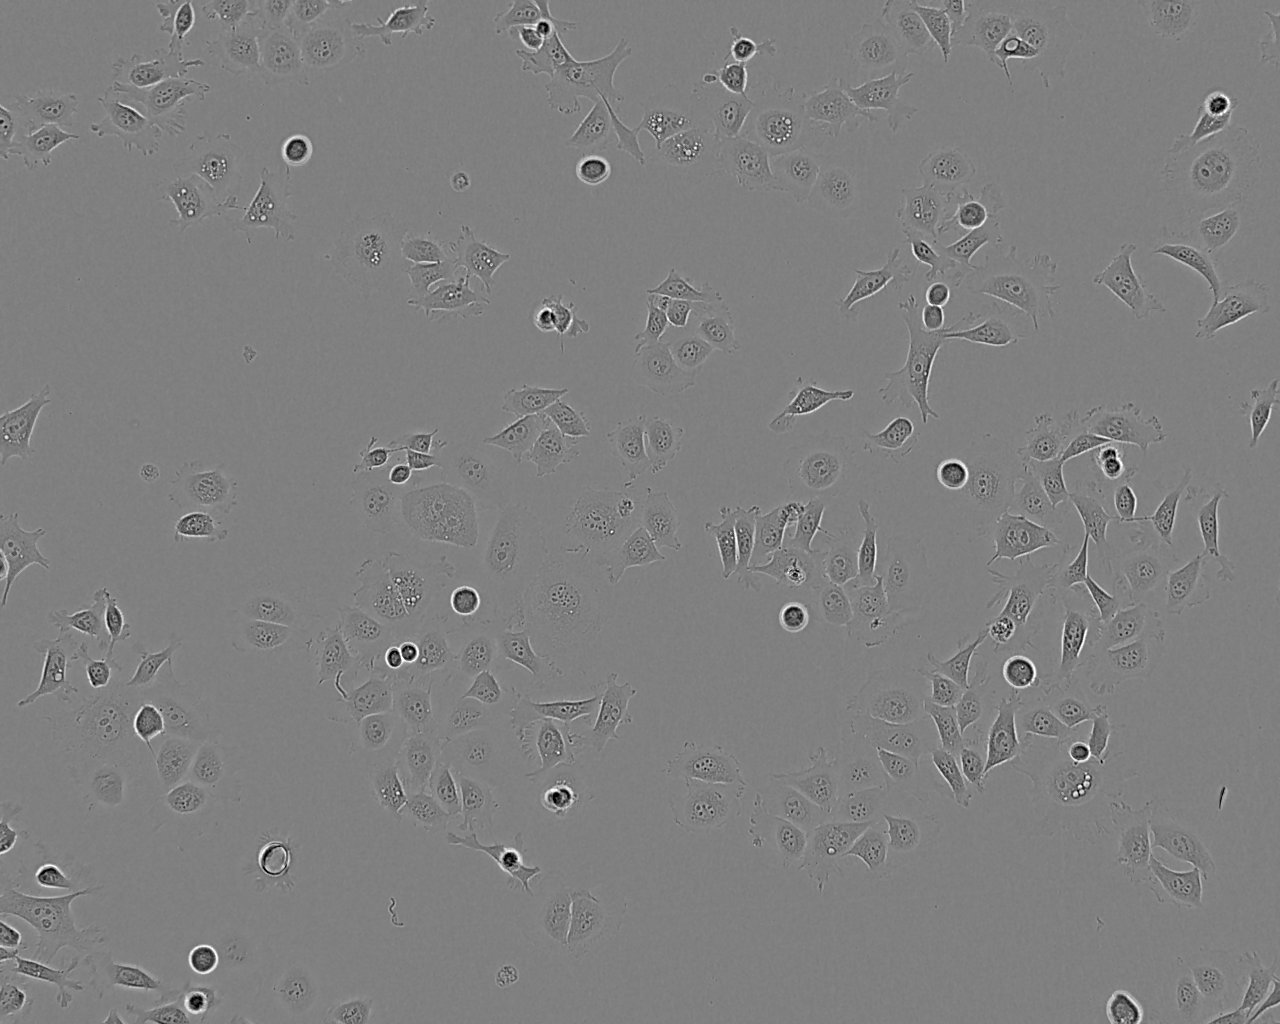 WEHI-164 Cells|小鼠纤维肉瘤可传代细胞系,WEHI-164 Cells